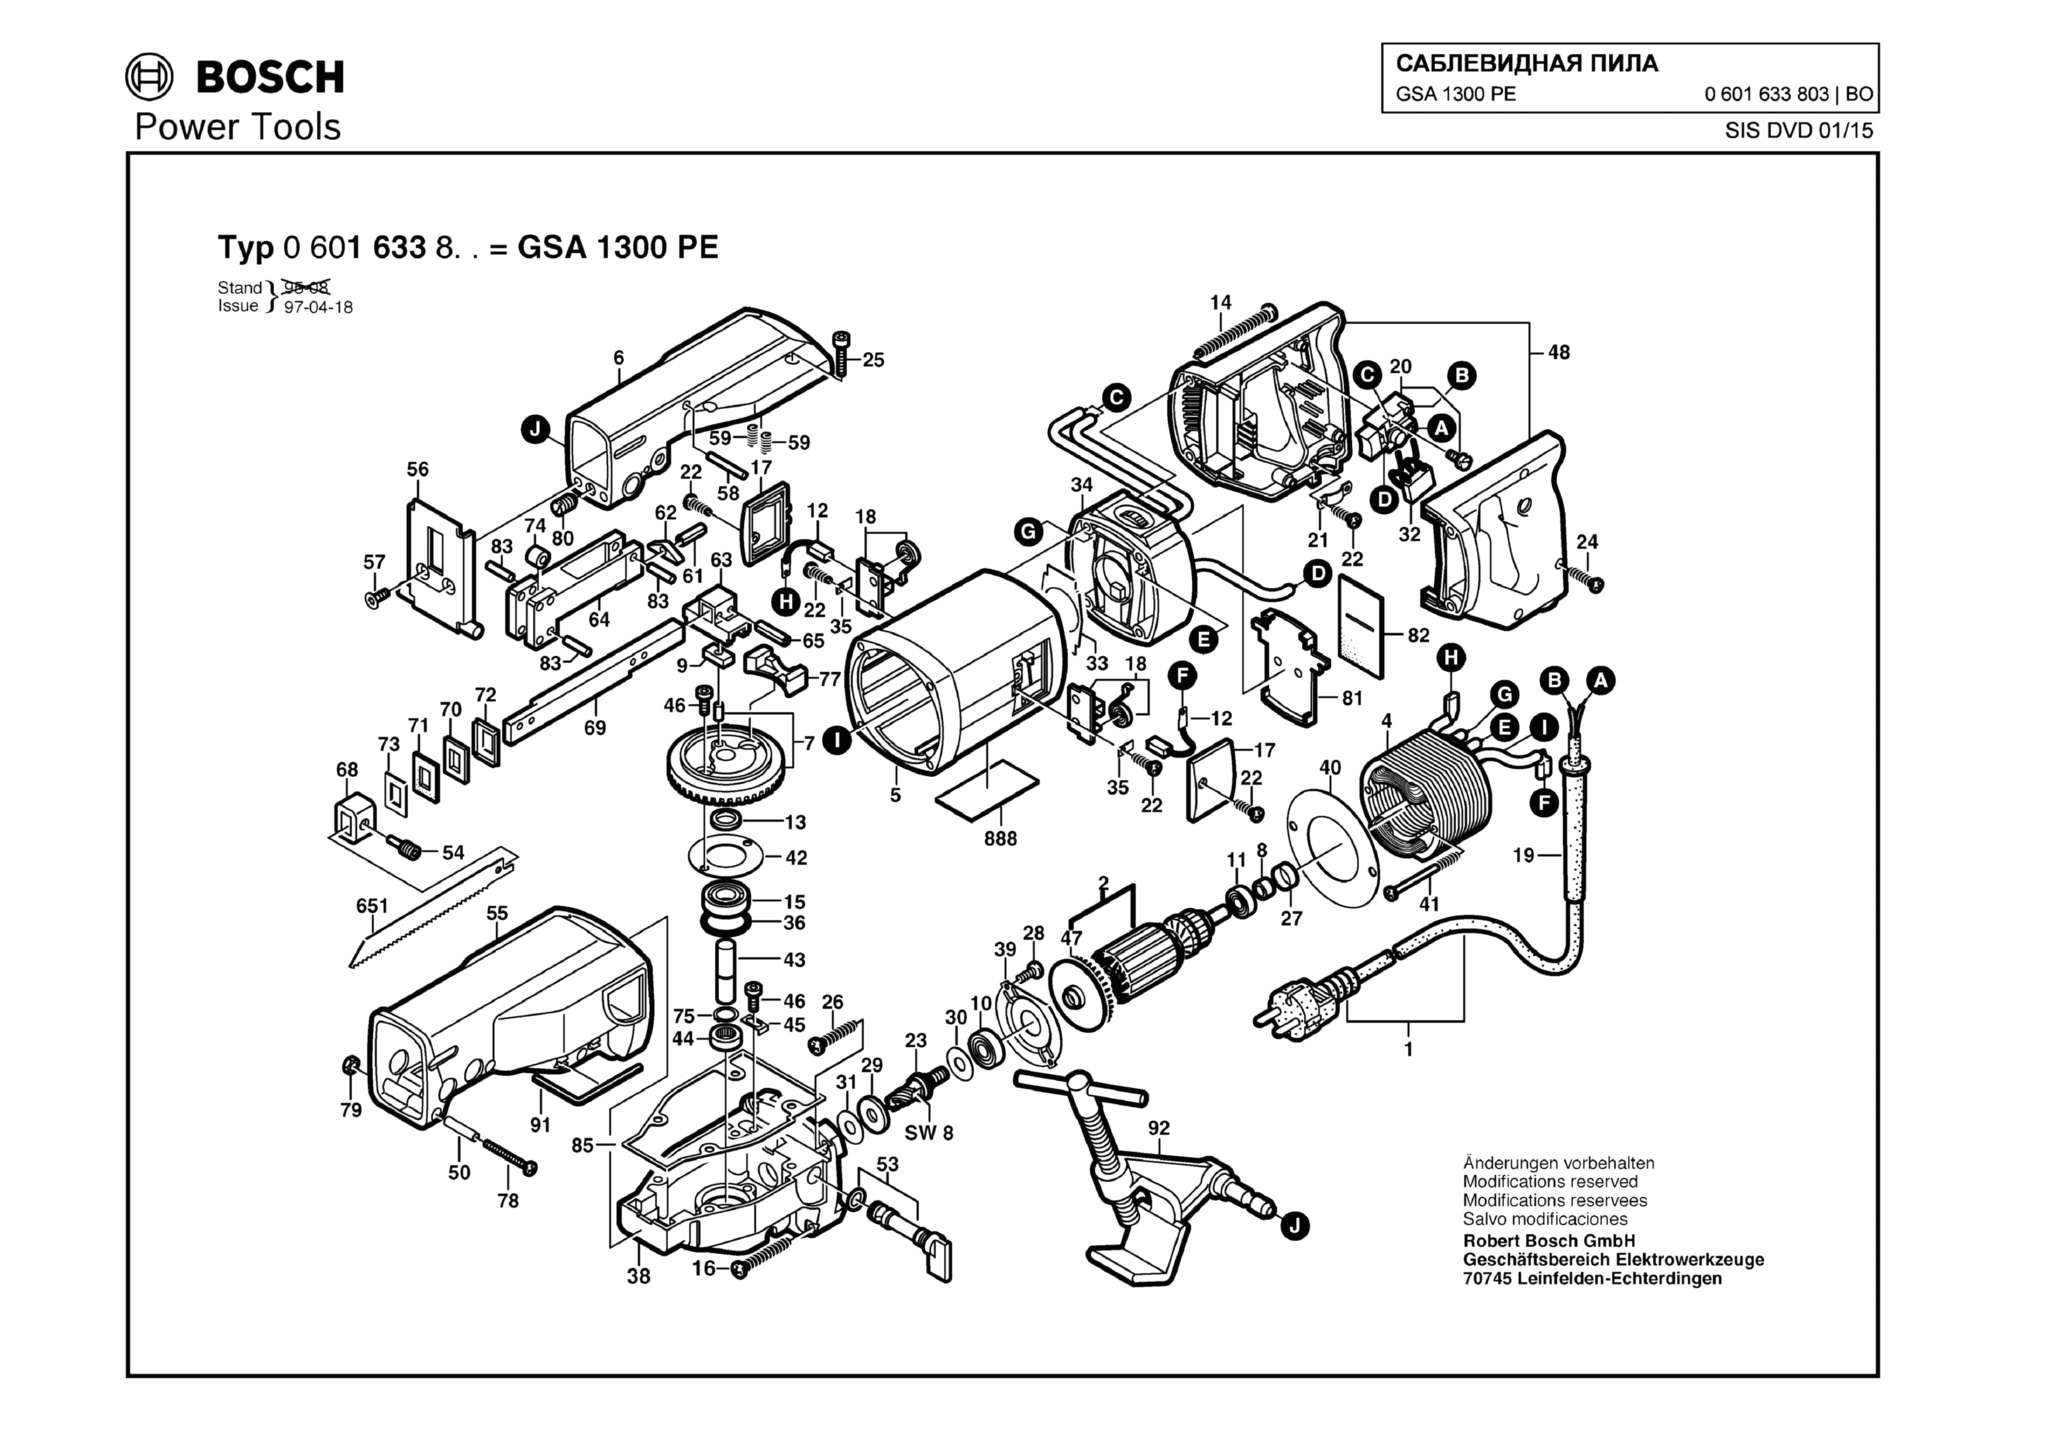 Запчасти, схема и деталировка Bosch GSA 1300 PE (ТИП 0601633803)